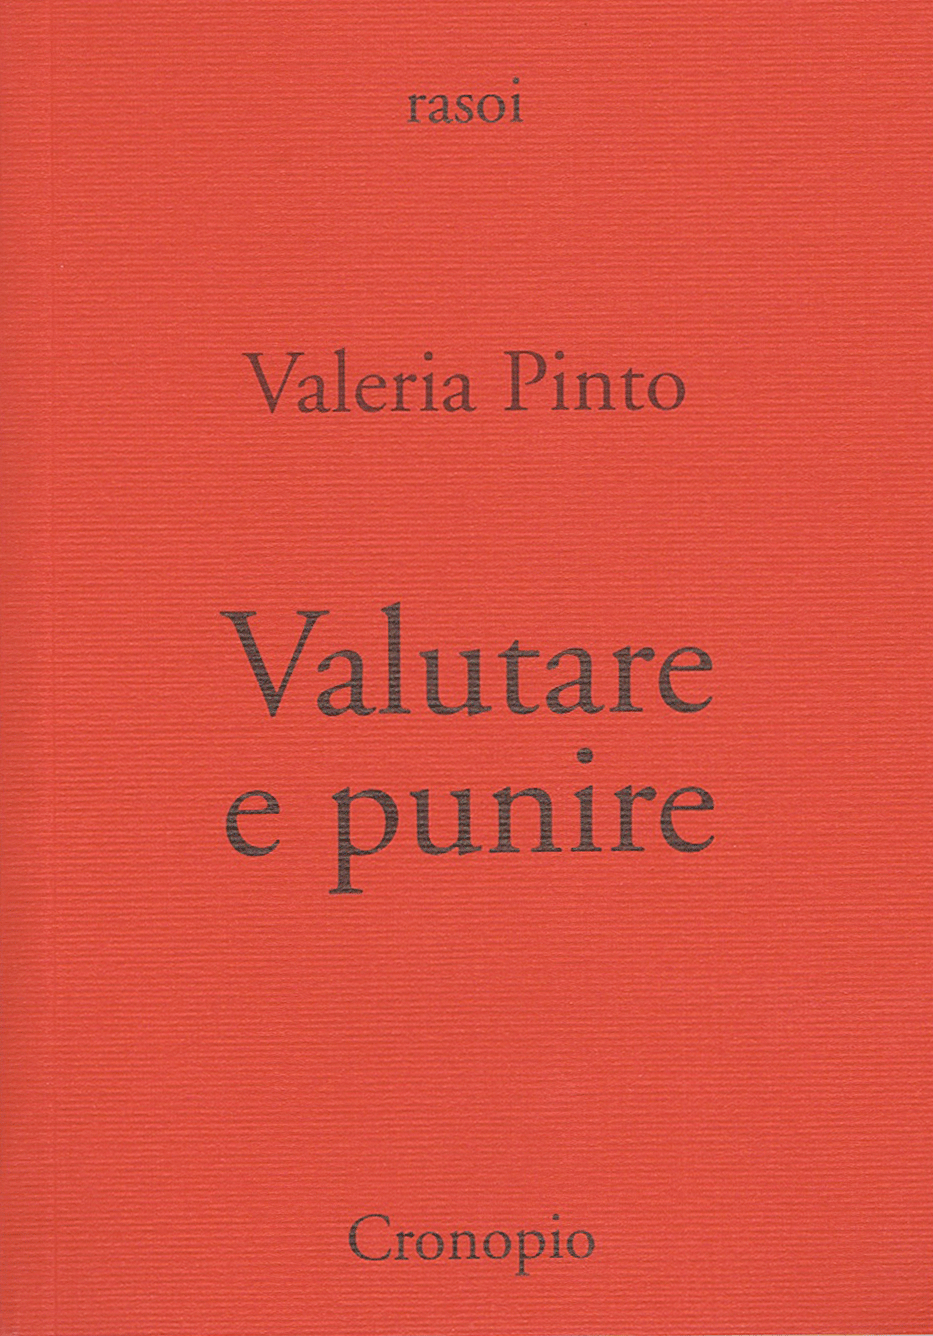 Valeria Pinto, Valutare e punire